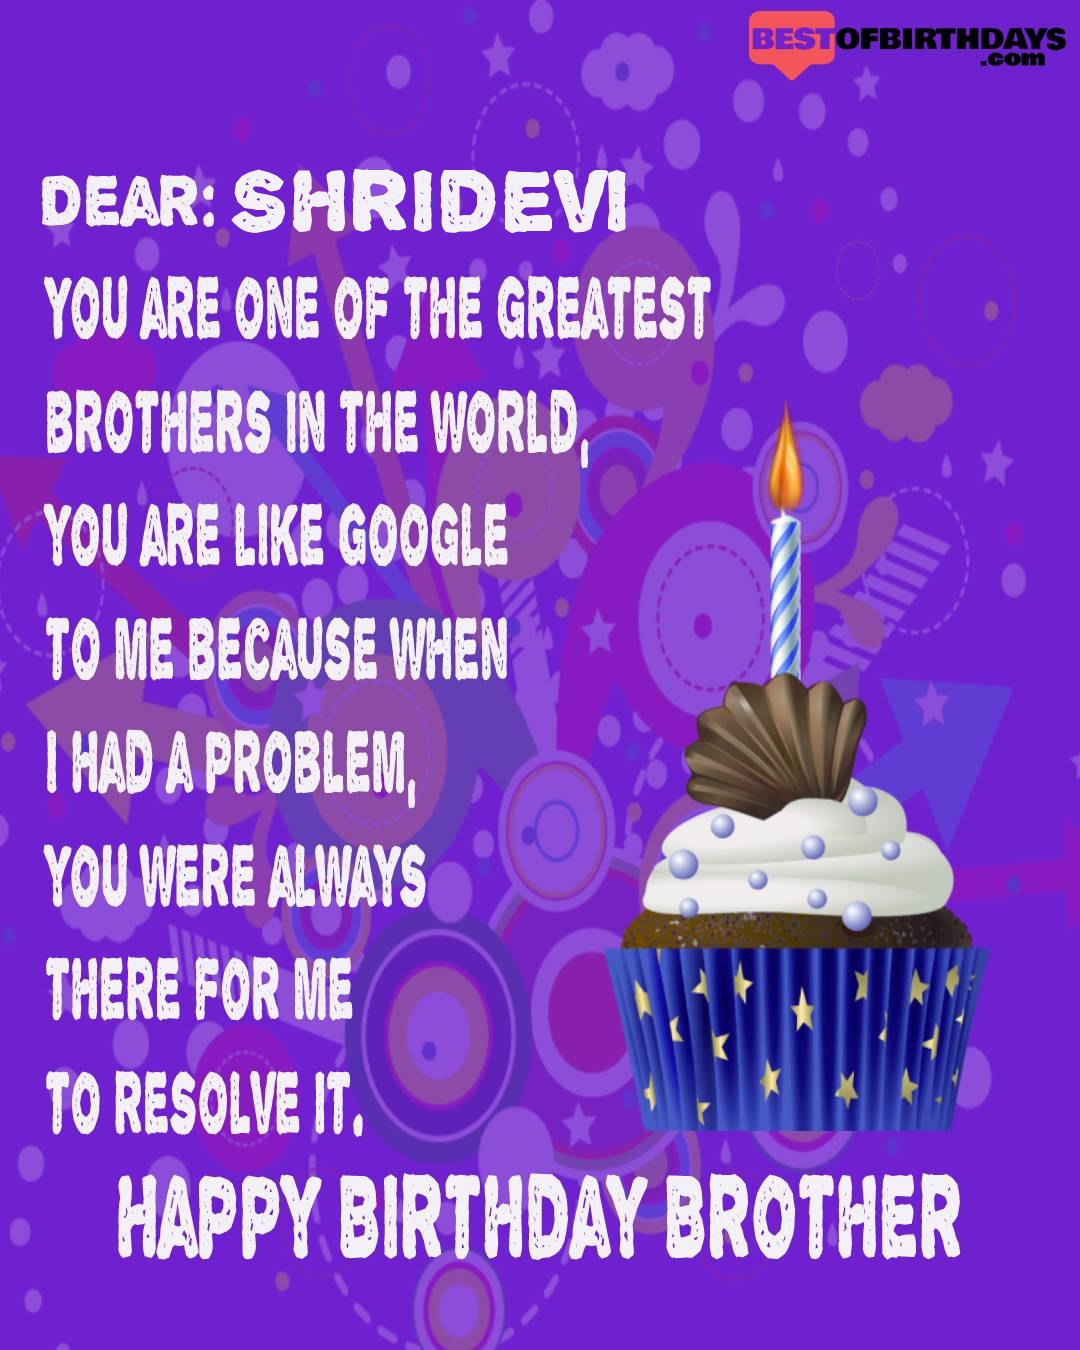 Happy birthday shridevi bhai brother bro